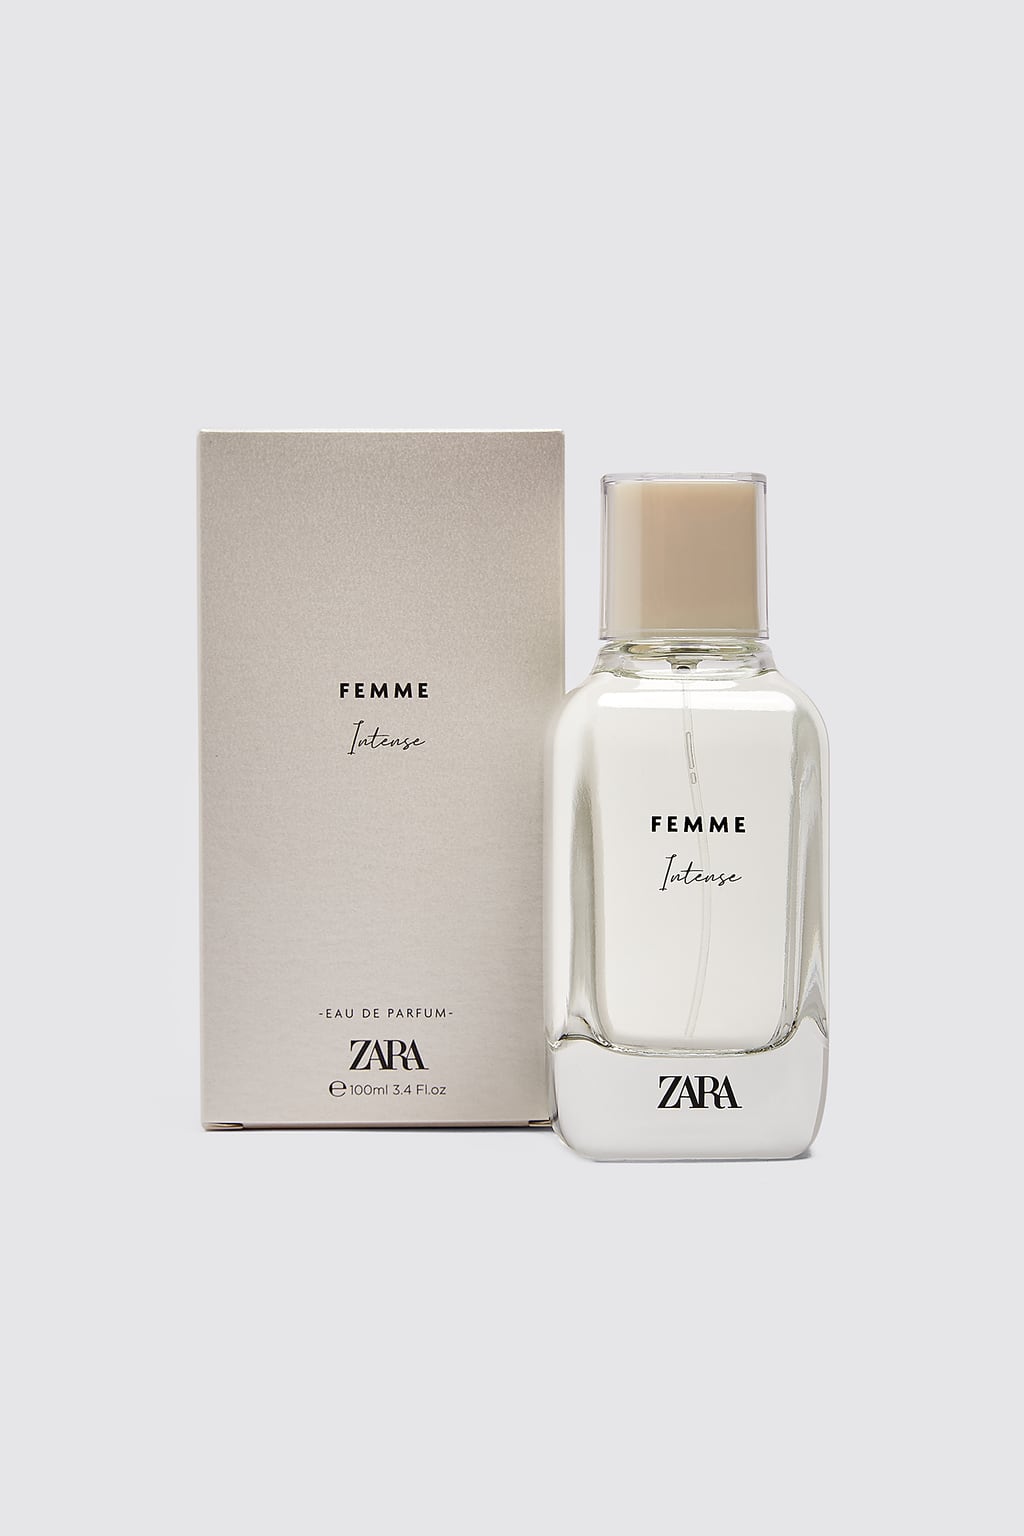 Femme Intense Zara perfume - a new fragrance for women 2019